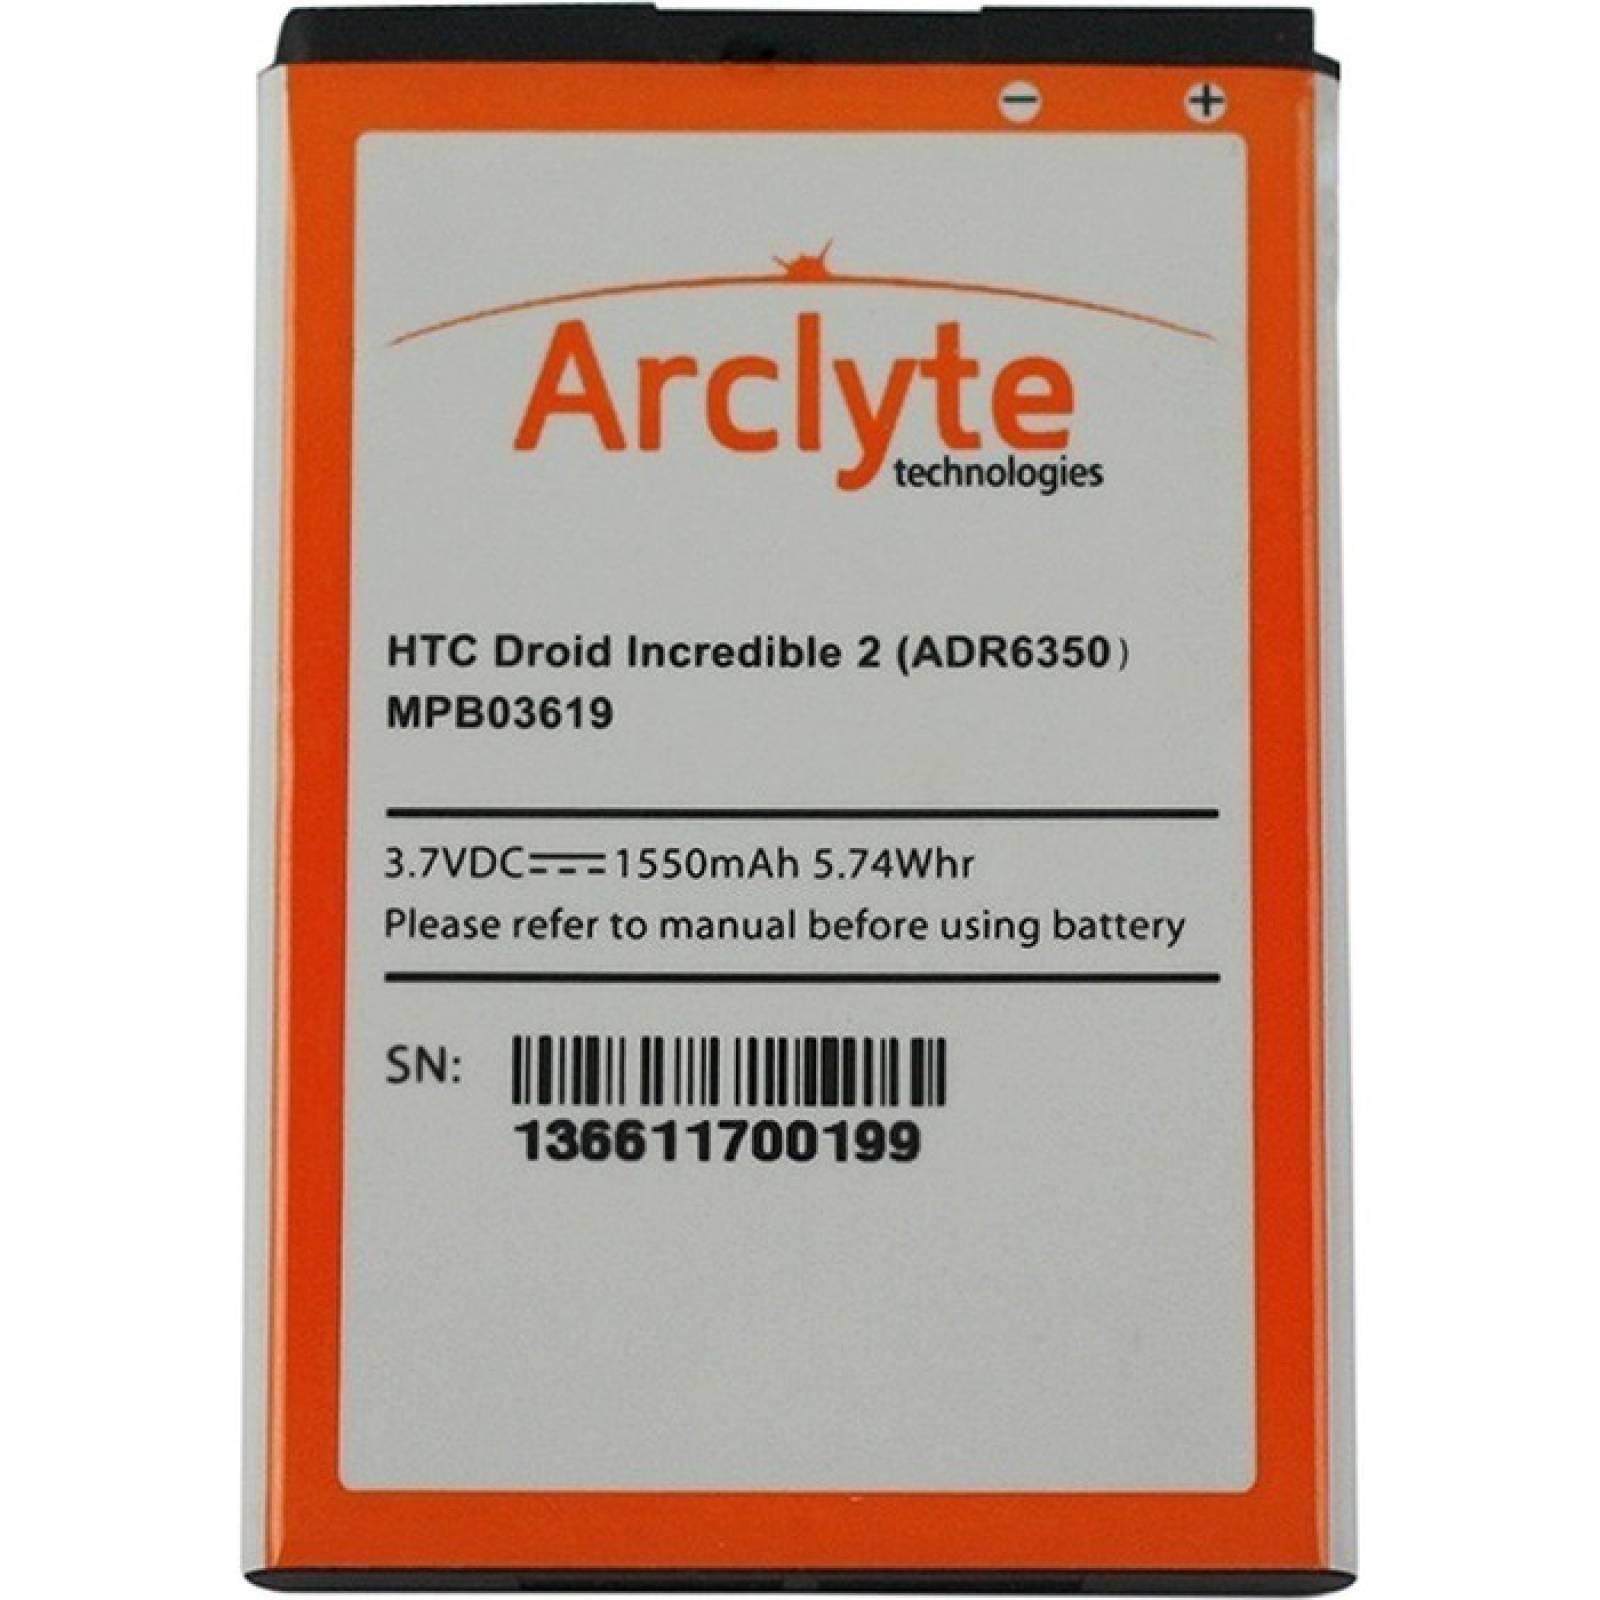 Arclyte HTC Batt ADR6350 Droid Incredible 2